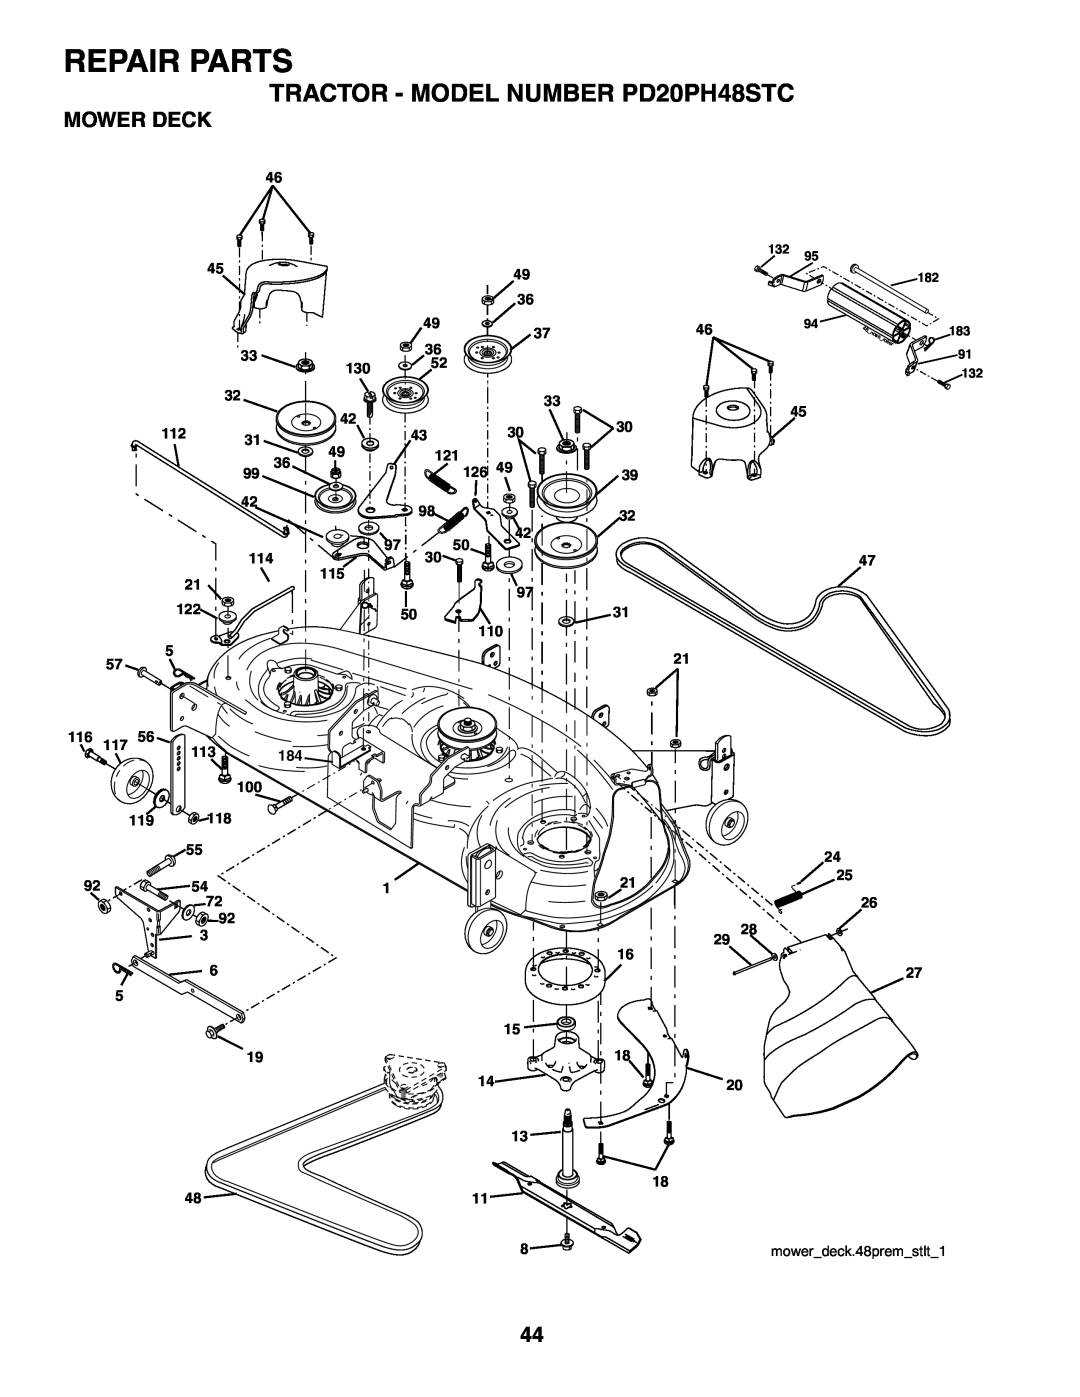 Poulan 187009 owner manual Mower Deck, Repair Parts, TRACTOR - MODEL NUMBER PD20PH48STC, mowerdeck.48premstlt1 